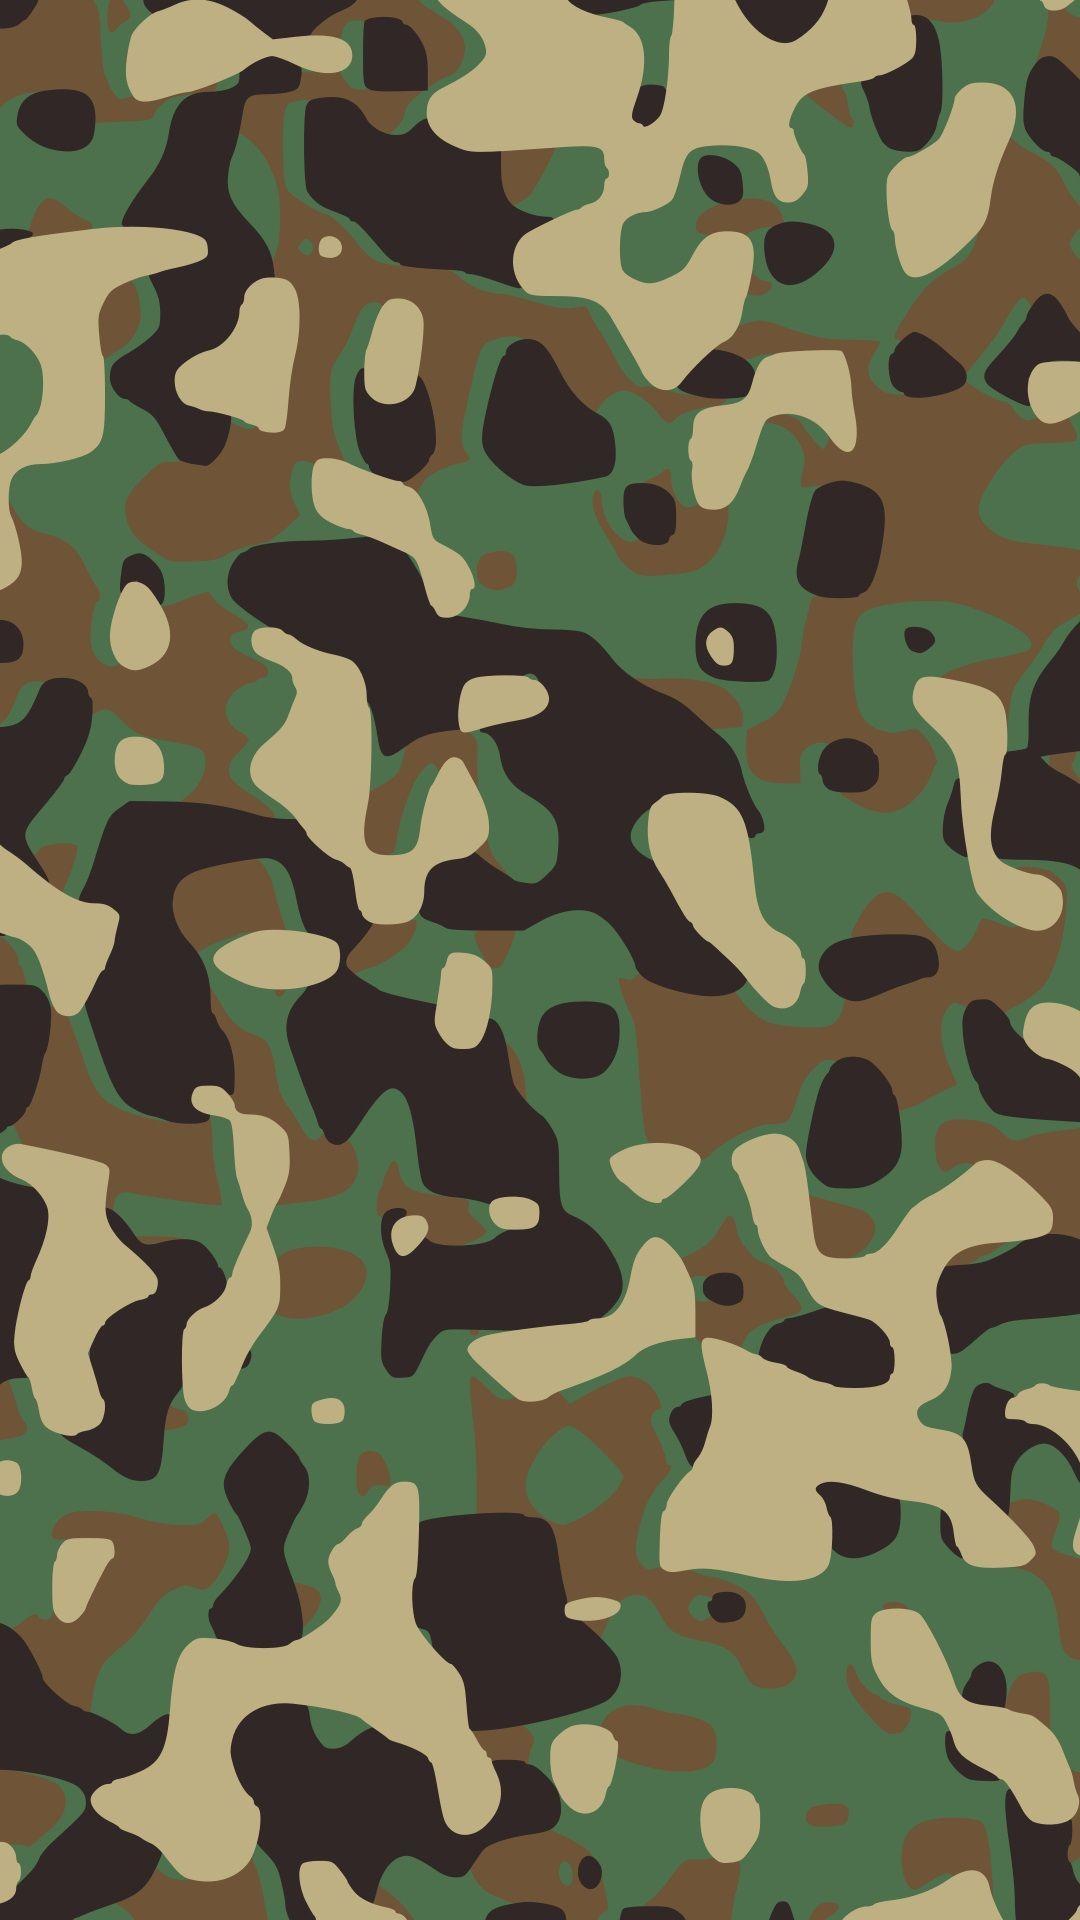 Camo wallpaper, Camouflage wallpaper .com